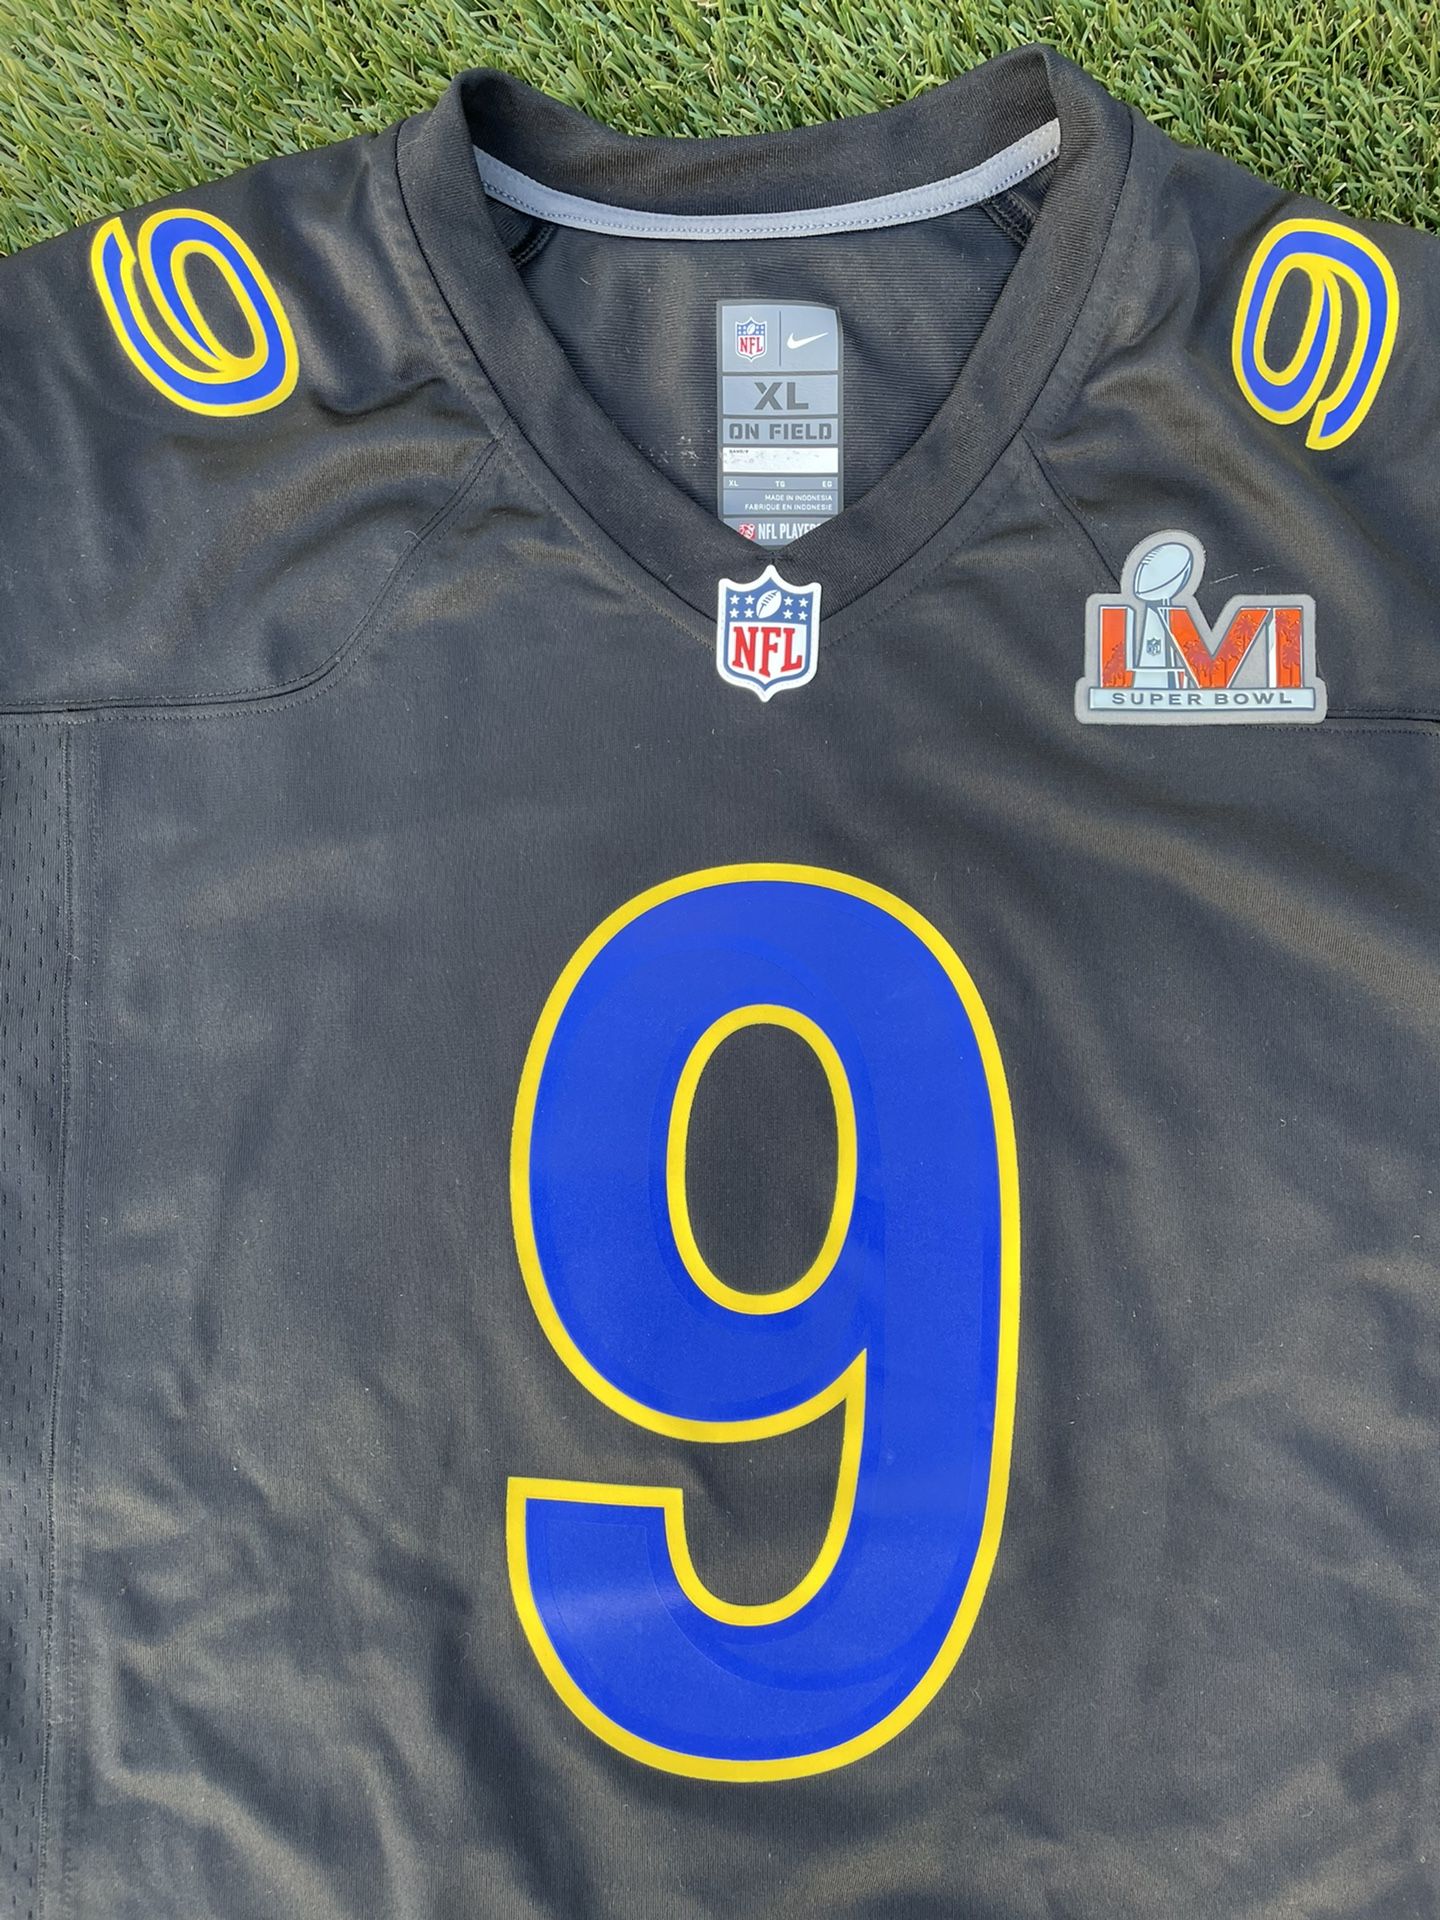 LA Rams Black Super Bowl Jersey XL for Sale in Los Angeles, CA - OfferUp